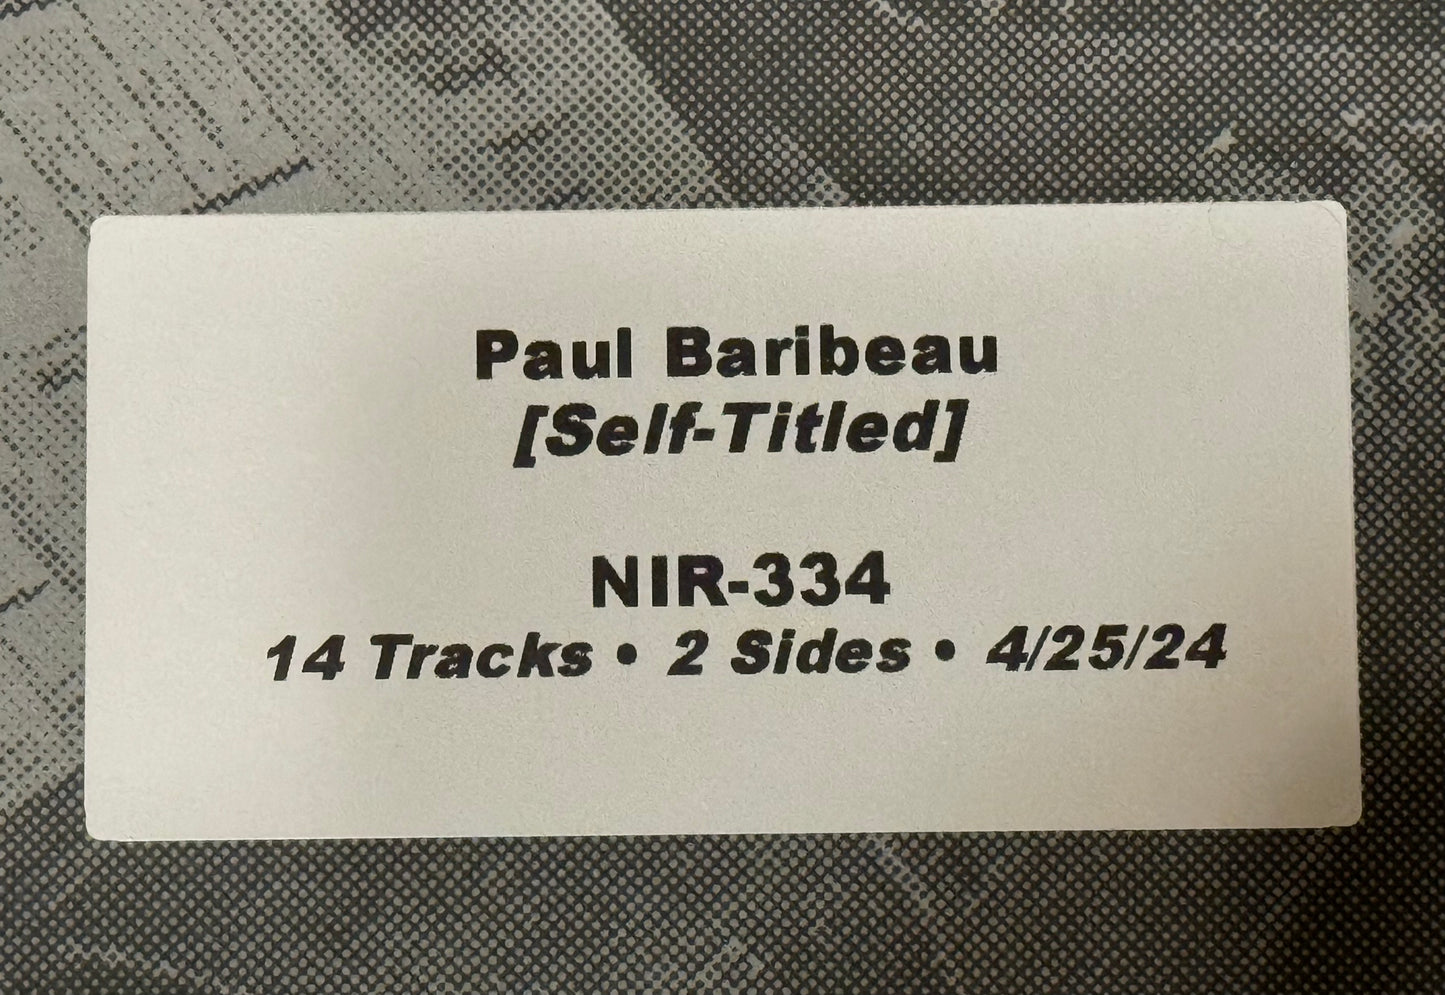 PAUL BARIBEAU "S/T" TEST PRESSING